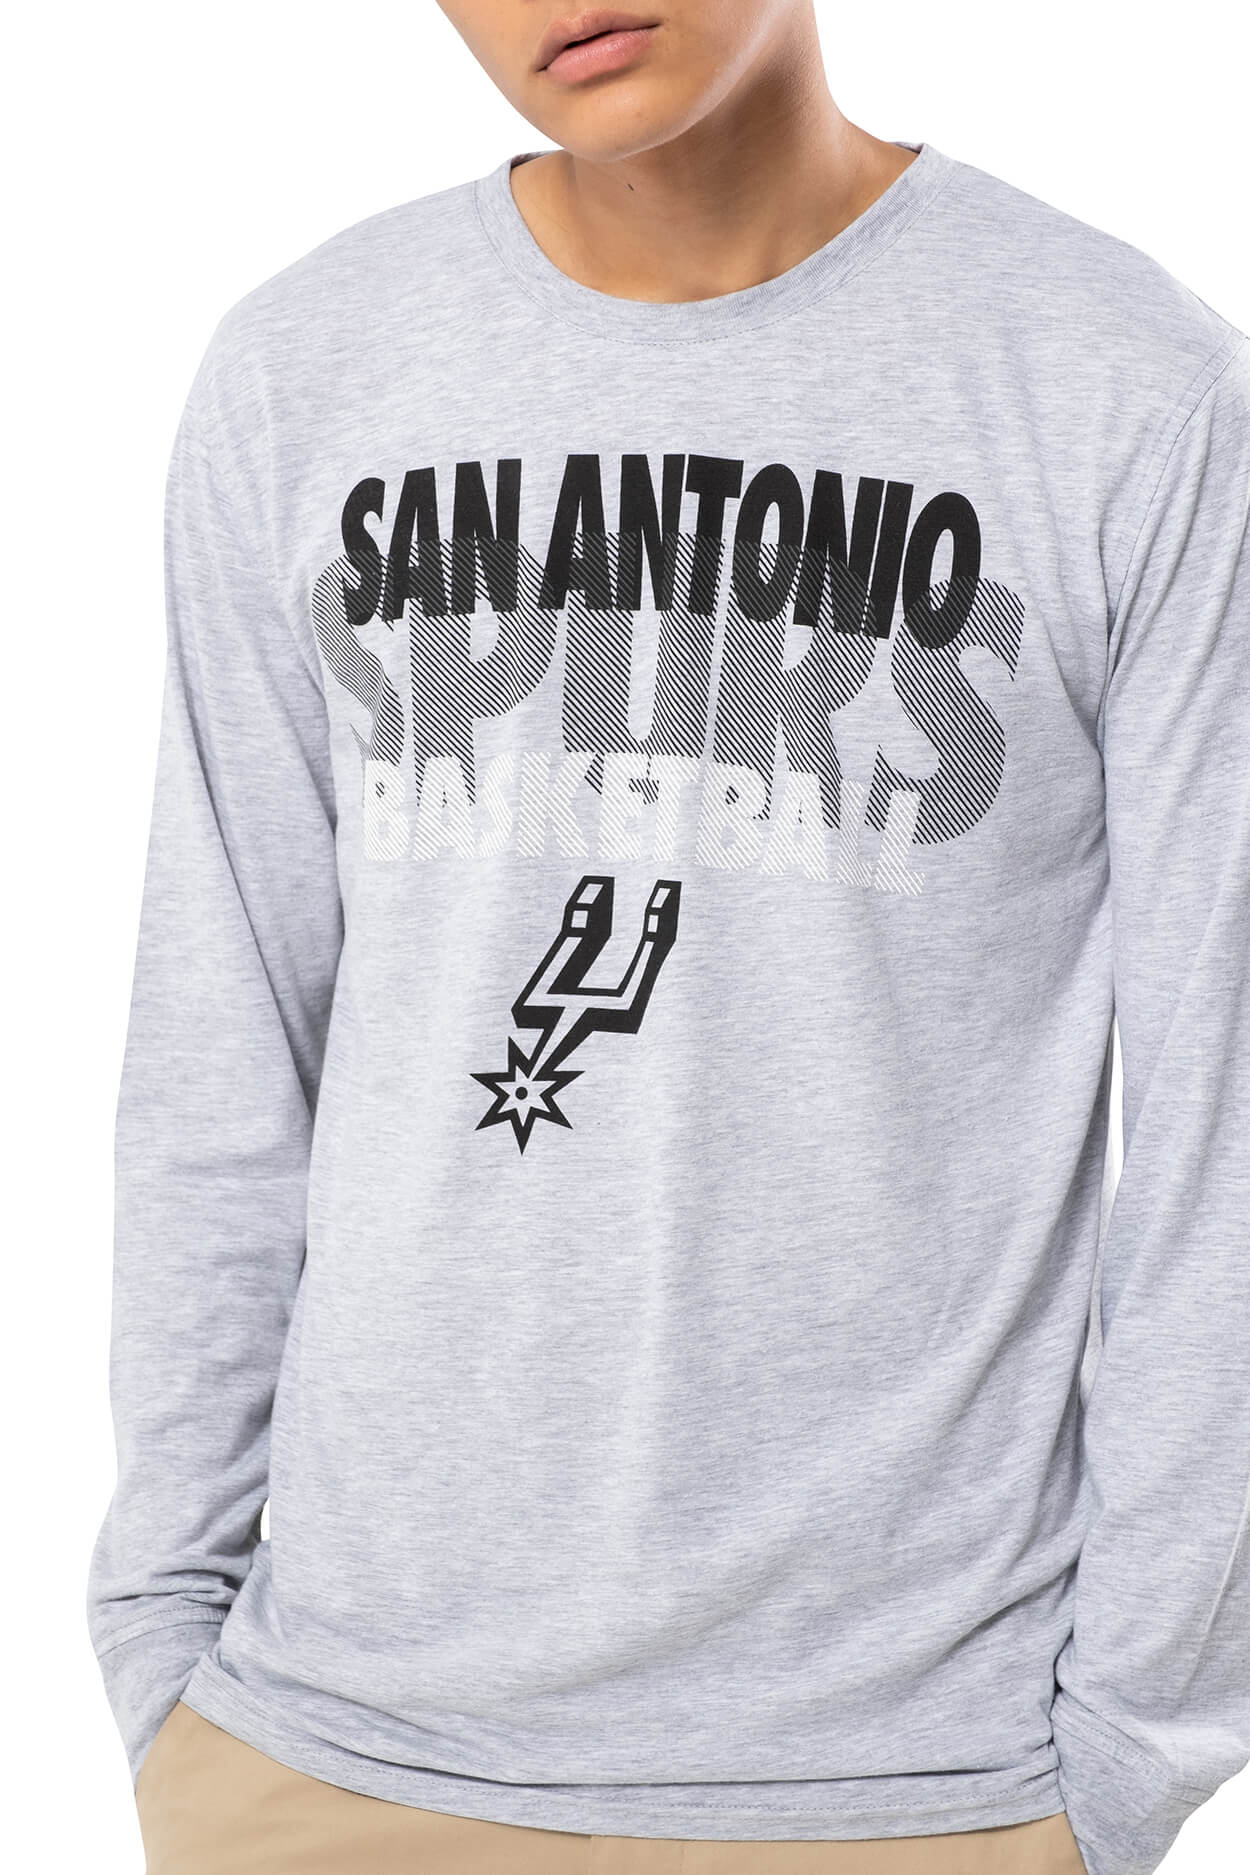 NBA San Antonio Spurs Men's Long Sleeve Pullover|San Antonio Spurs